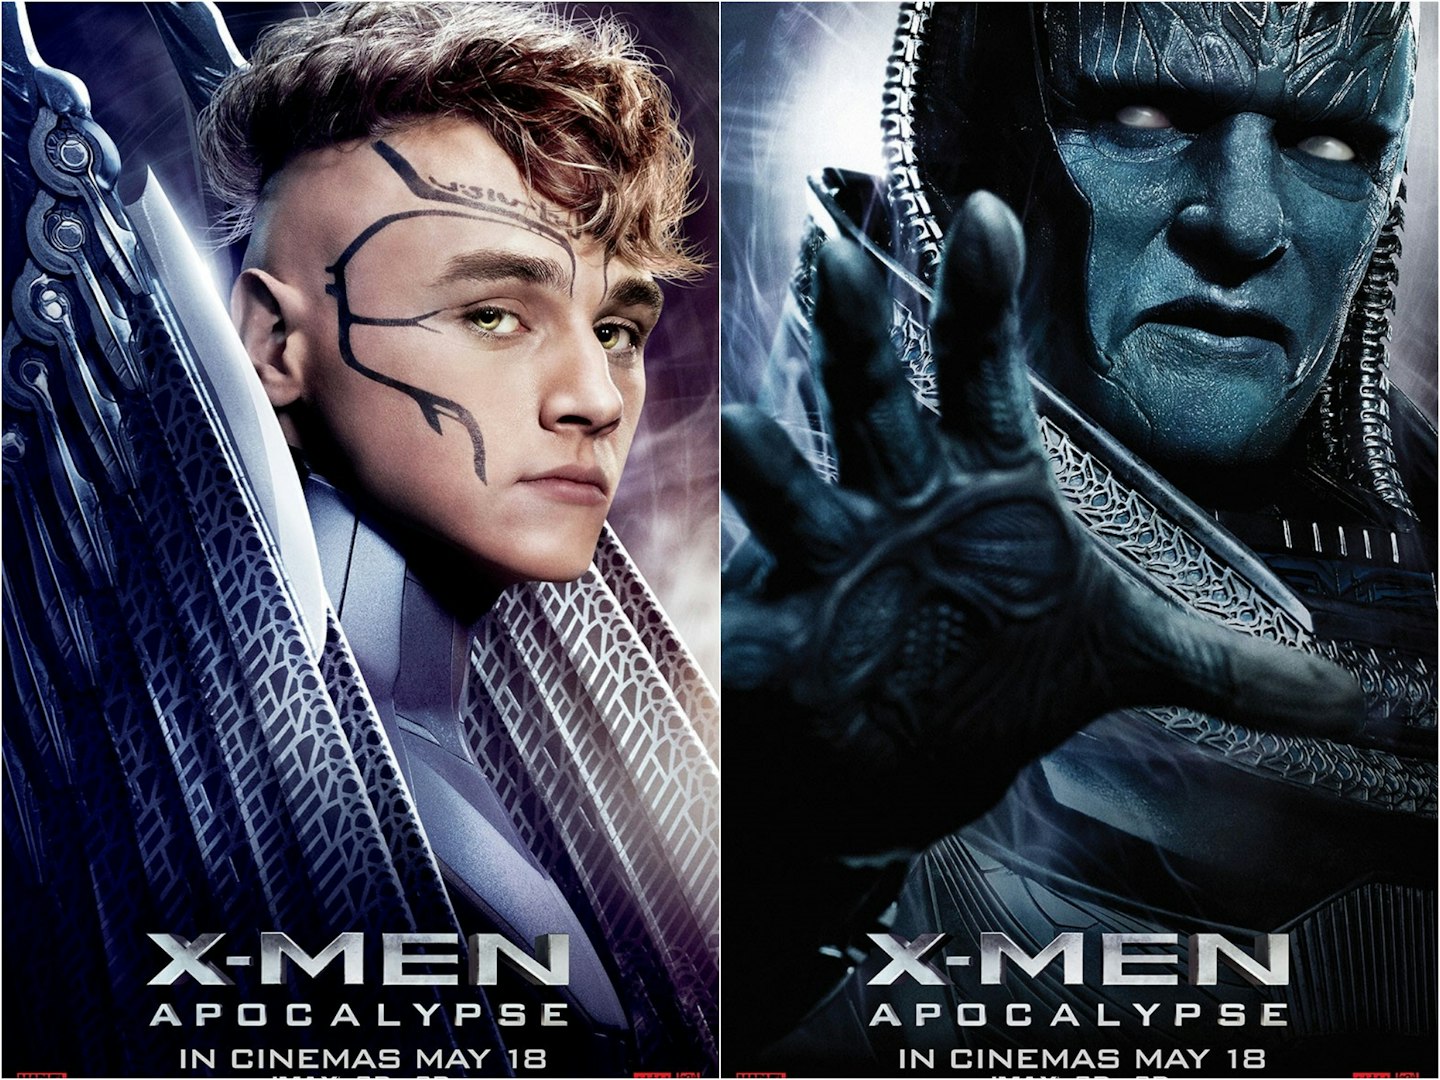 X-Men: Apocalypse character posters